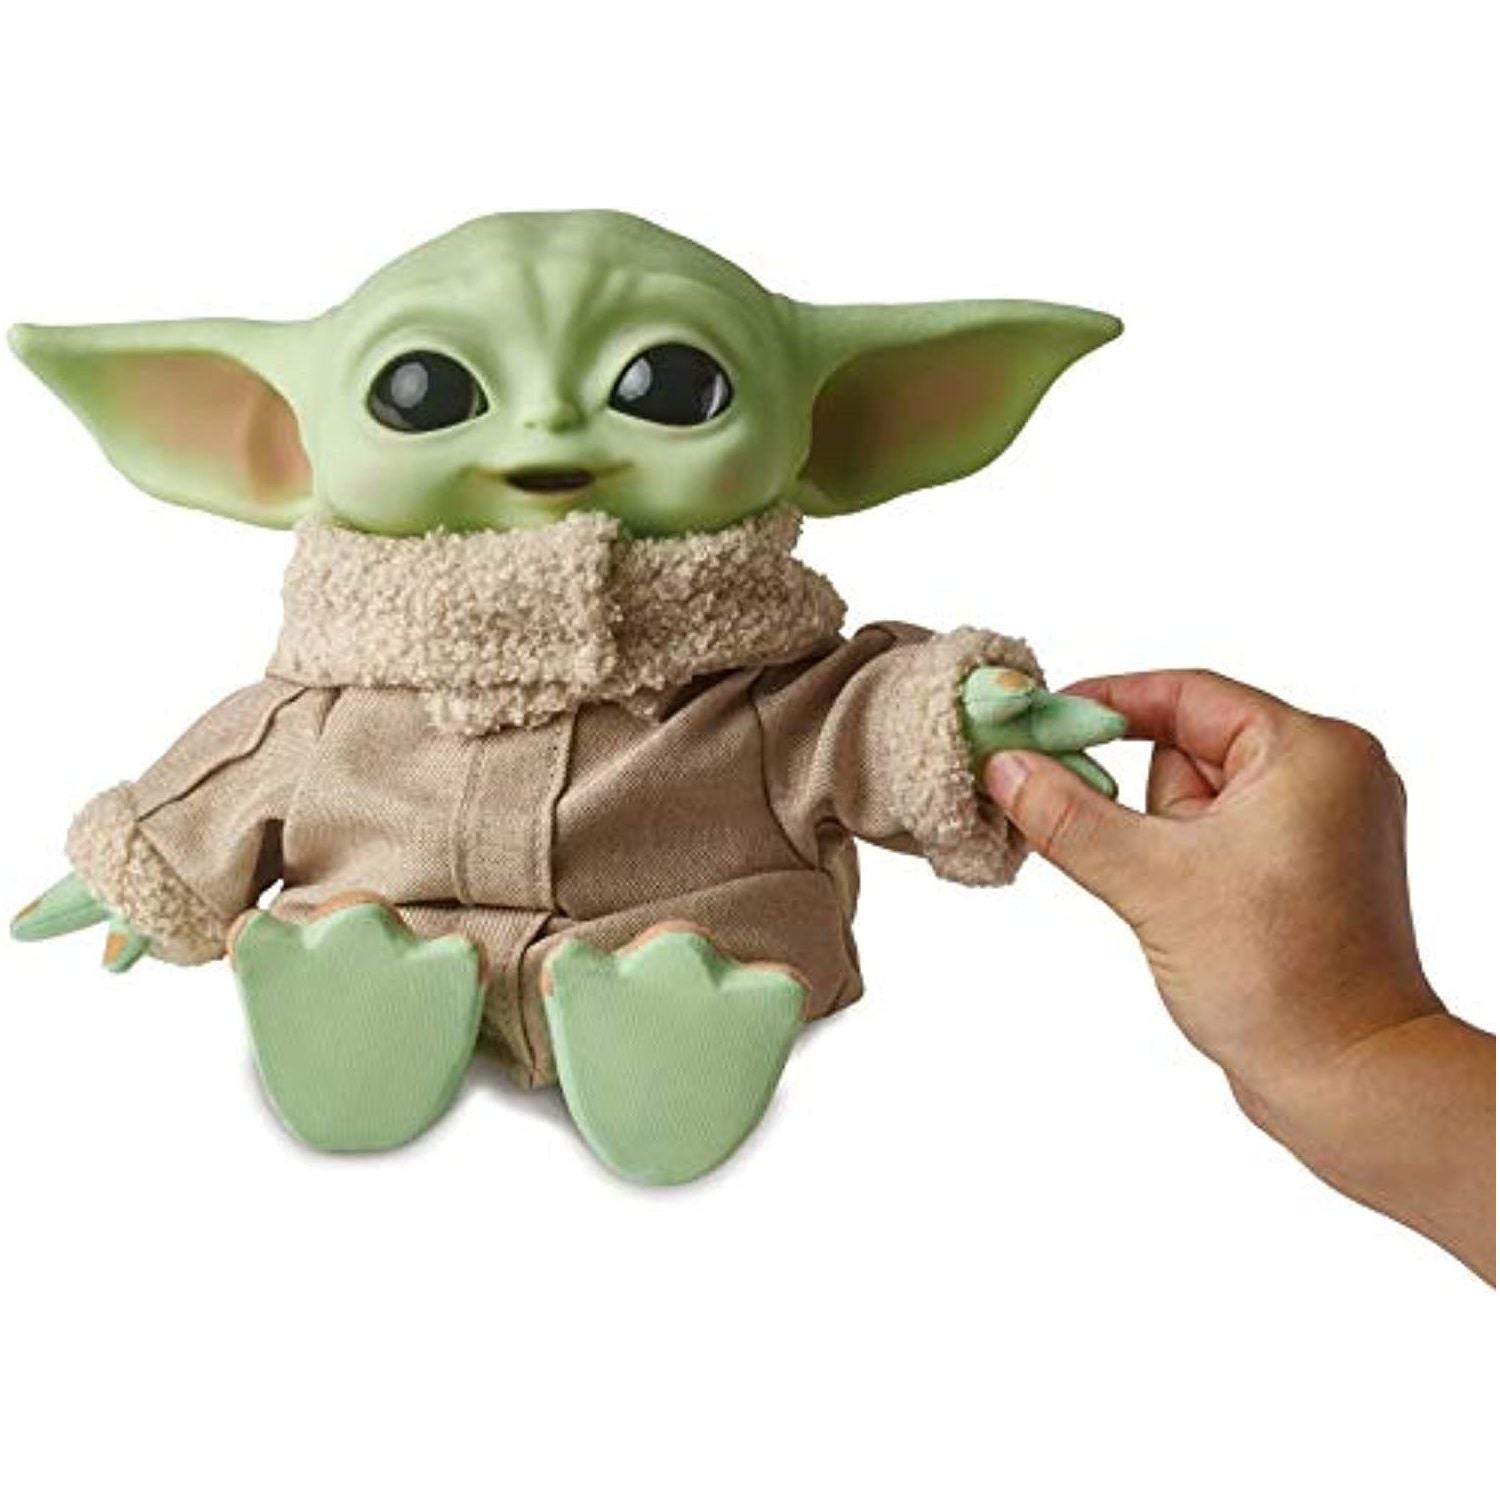 Mattel - Star Wars - The Mandalorian: The Child 2.0 11" Basic Plush Baby Yoda